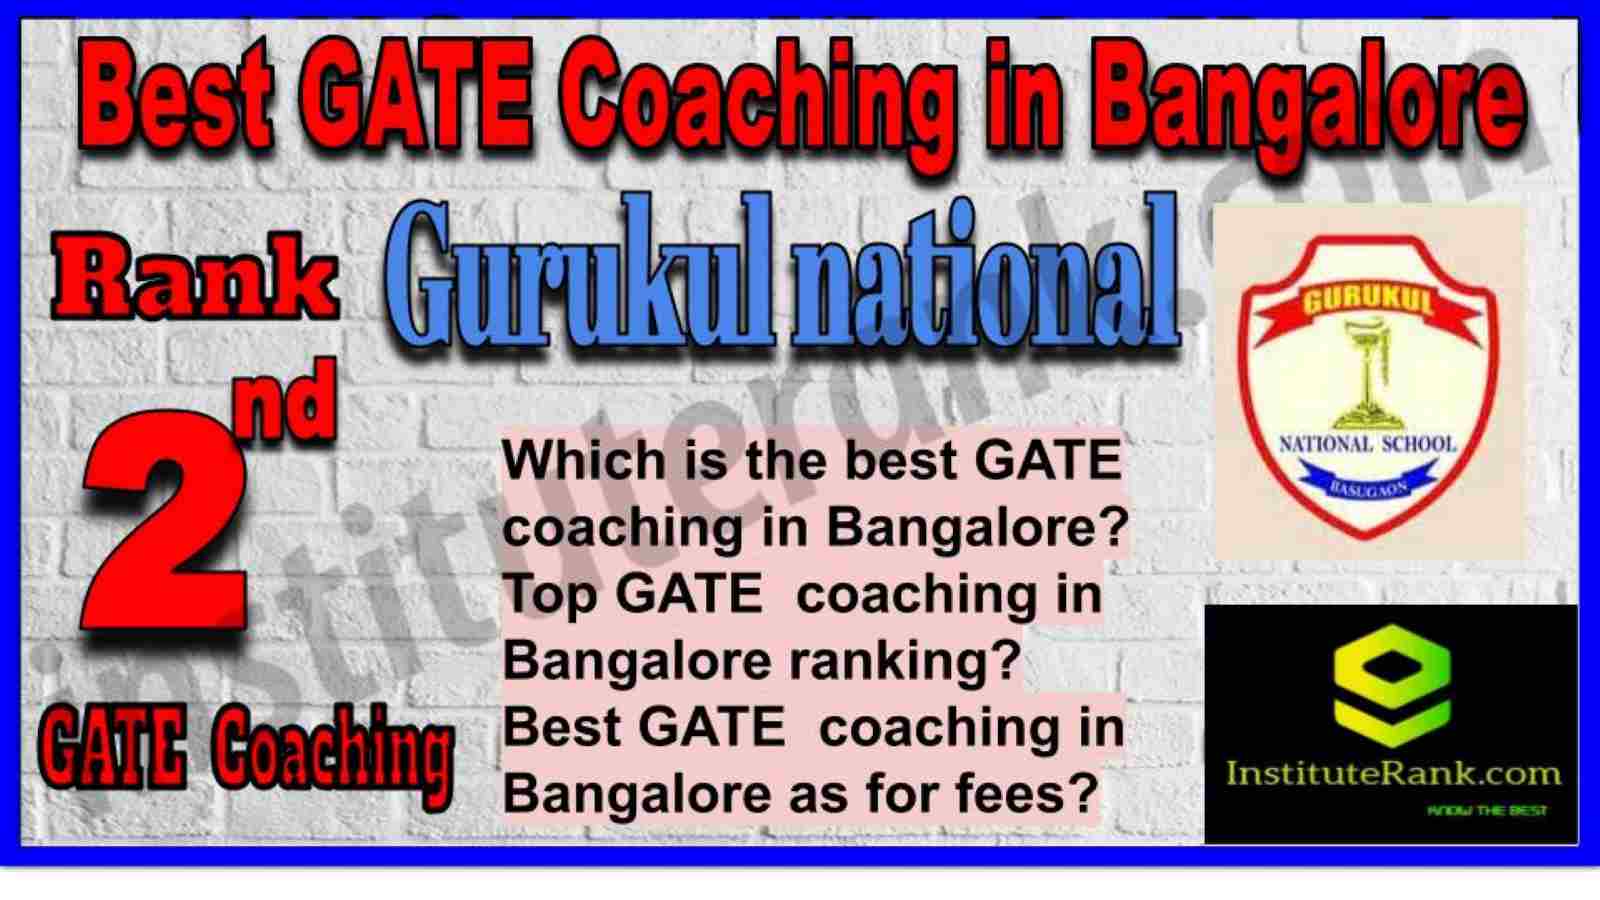 Rank 2 Best GATE Coaching in Bangalore